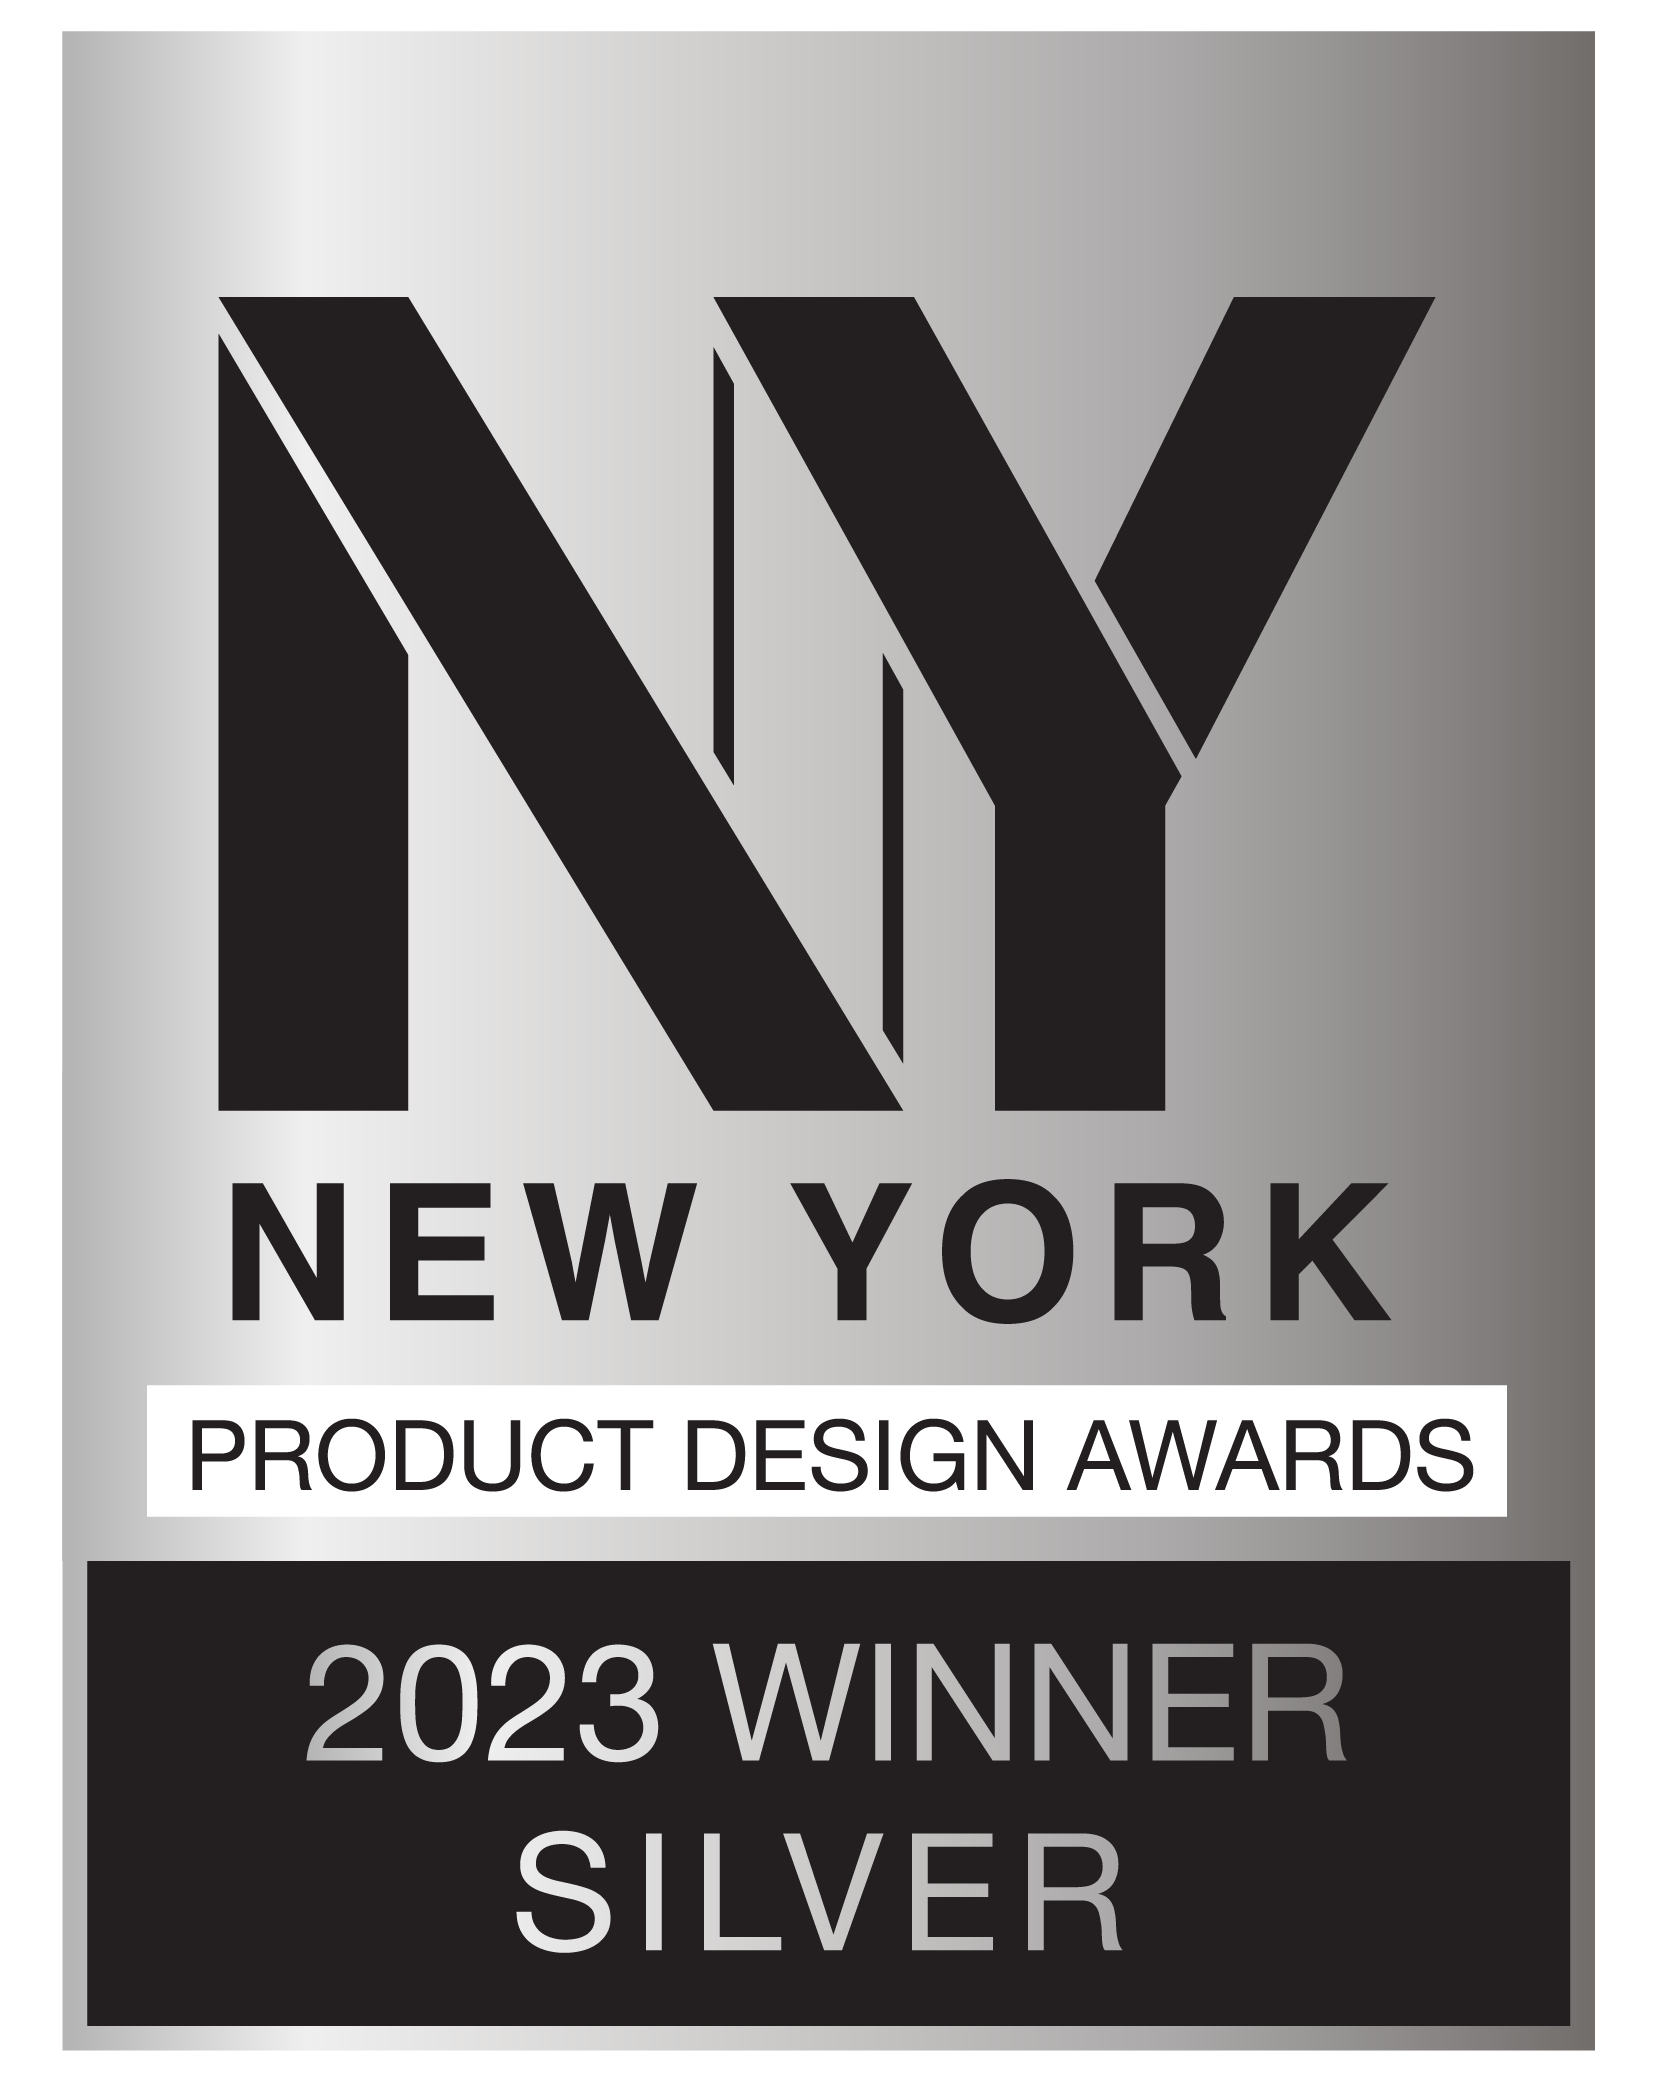 Design Awards Silver Winner - ADAMAN DOORS AND WINDOWS SYSTEM (USA) INC